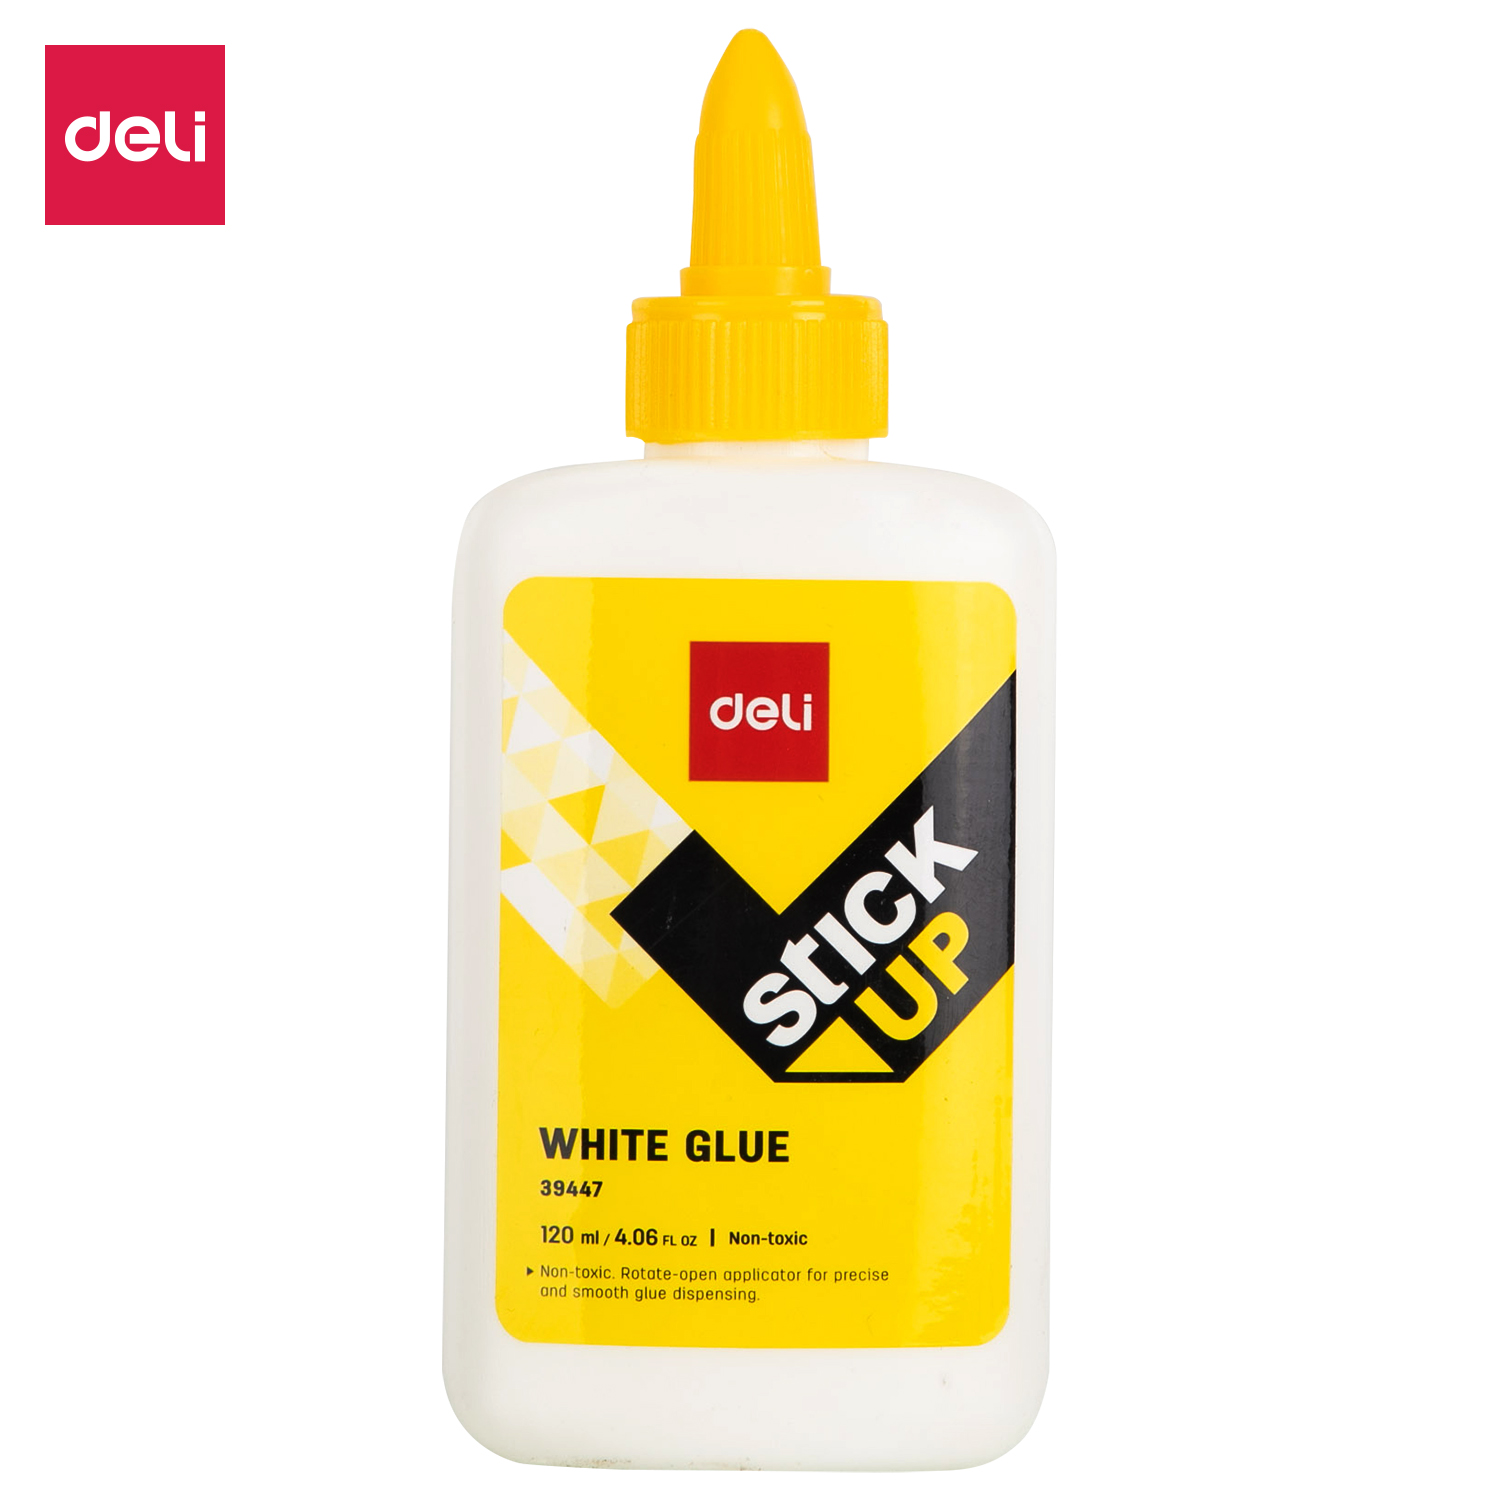 Deli-E39447 White glue